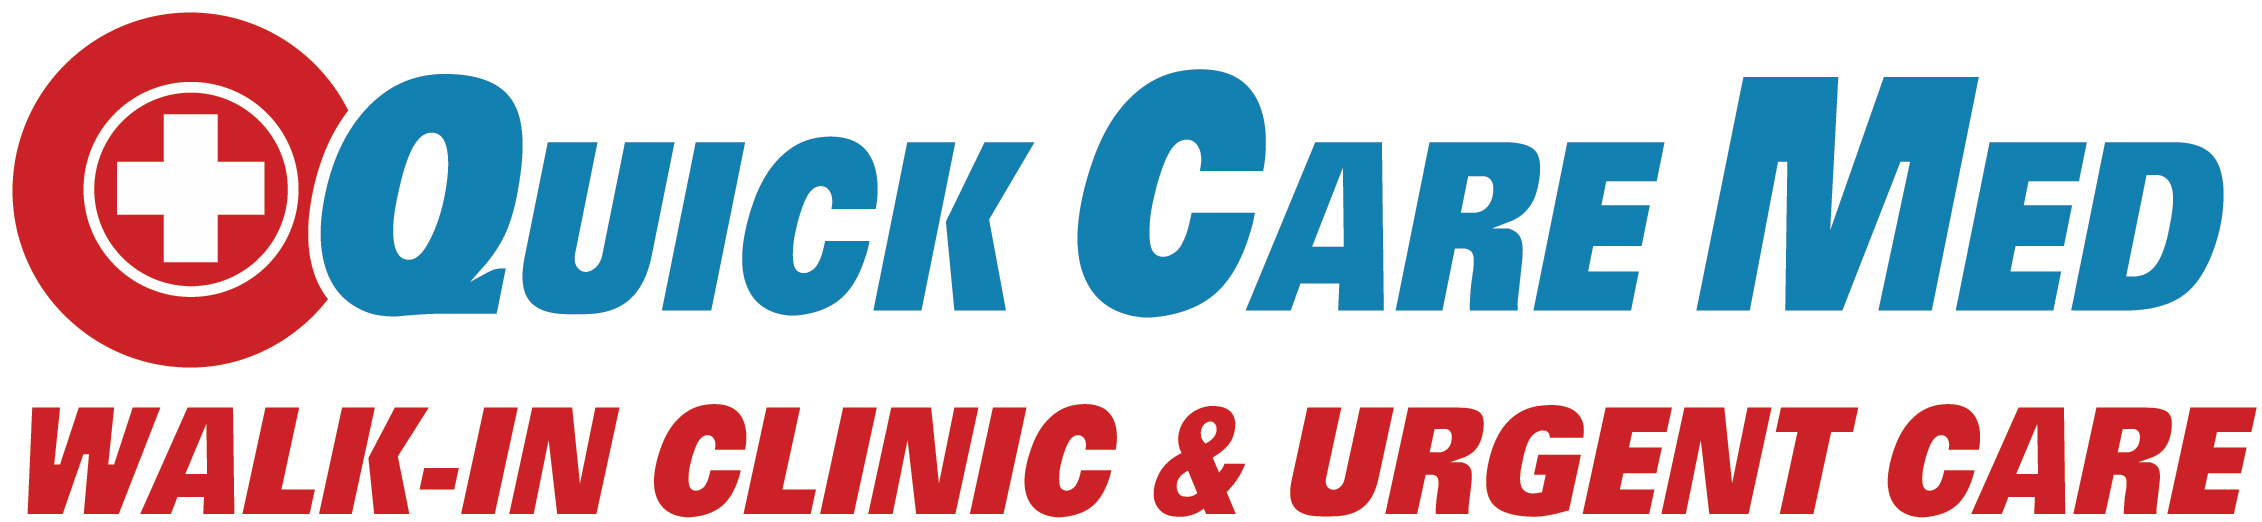 Quick Care Med of Ocala reviews | 8119 SW State Rd - Ocala FL